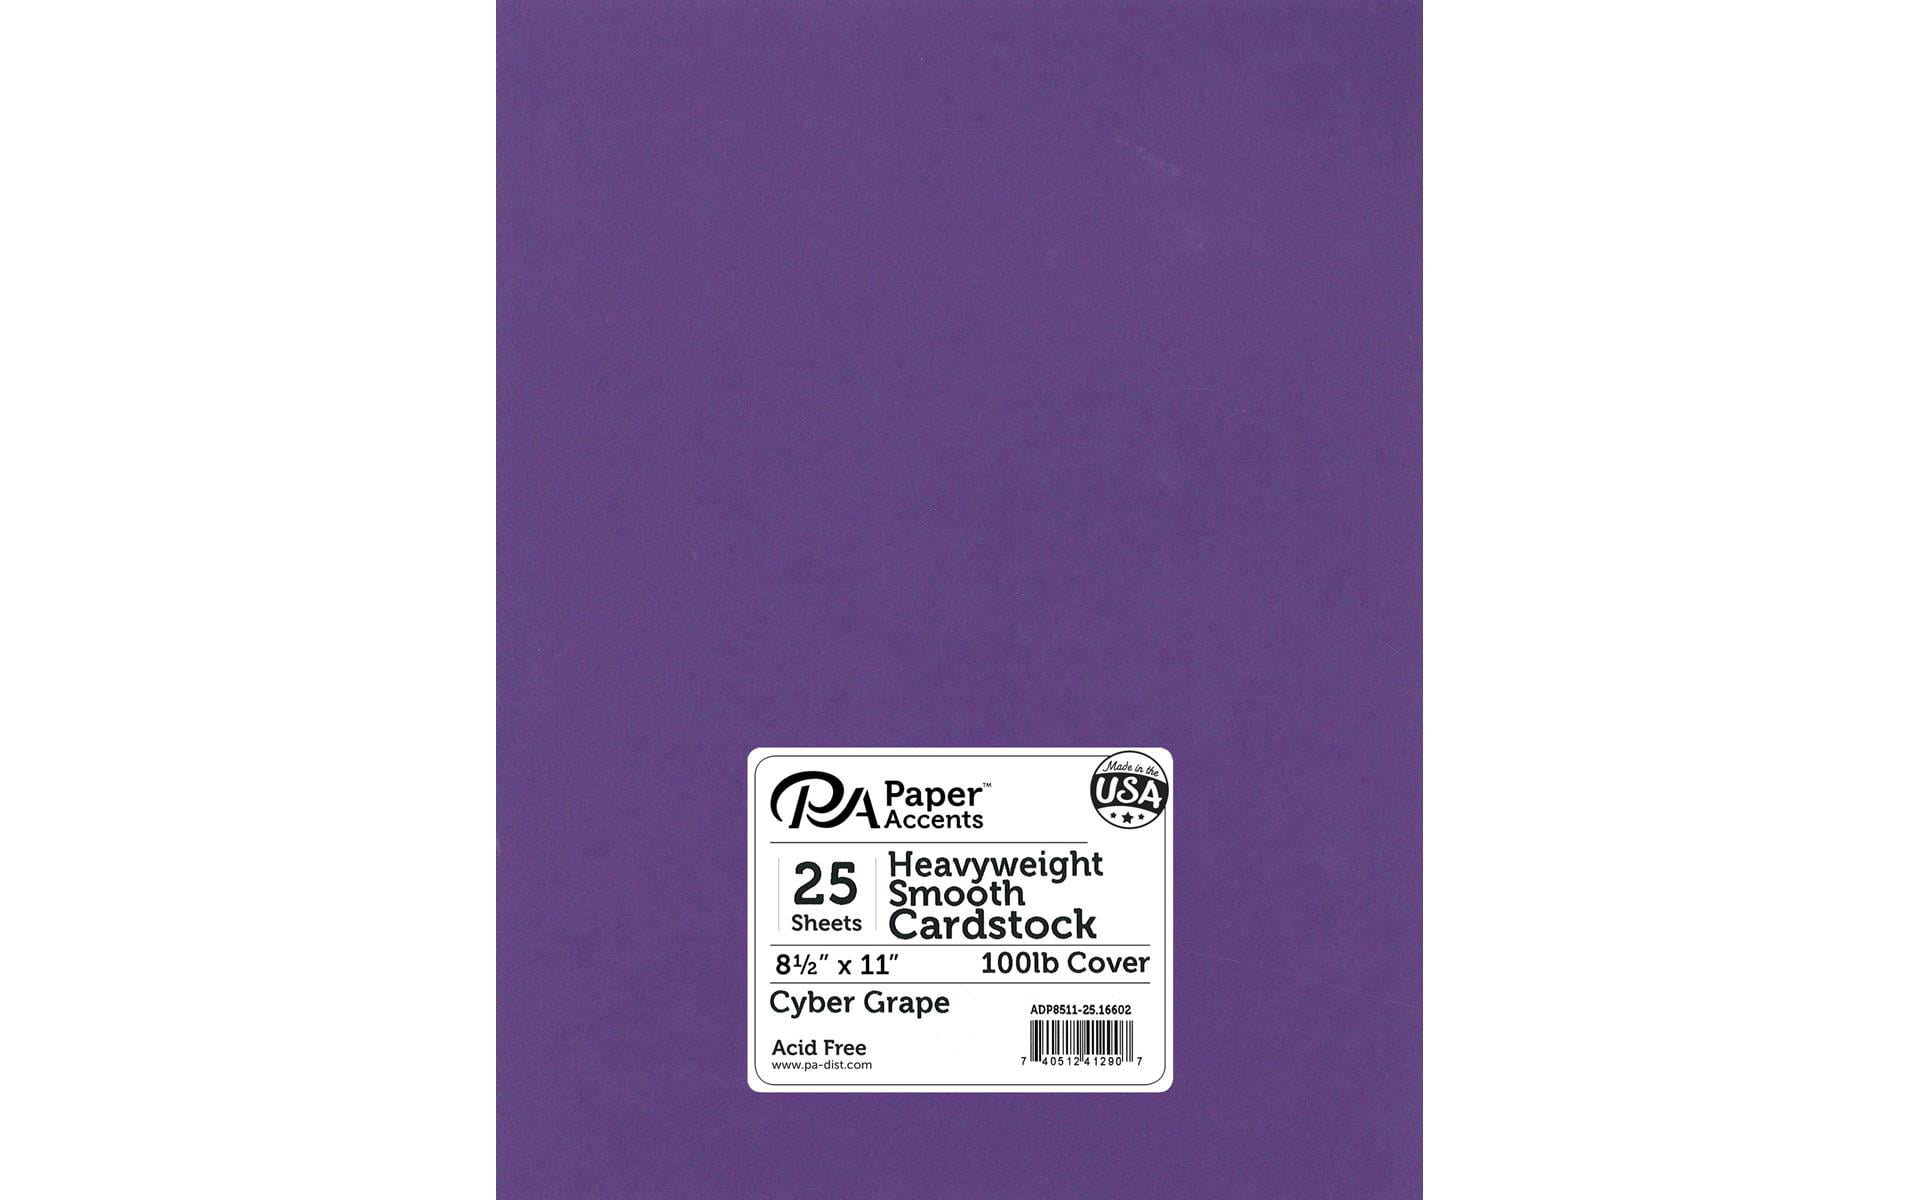 Cardstock Pad 5x7 48pc Bright Assortment, 1 - Food 4 Less